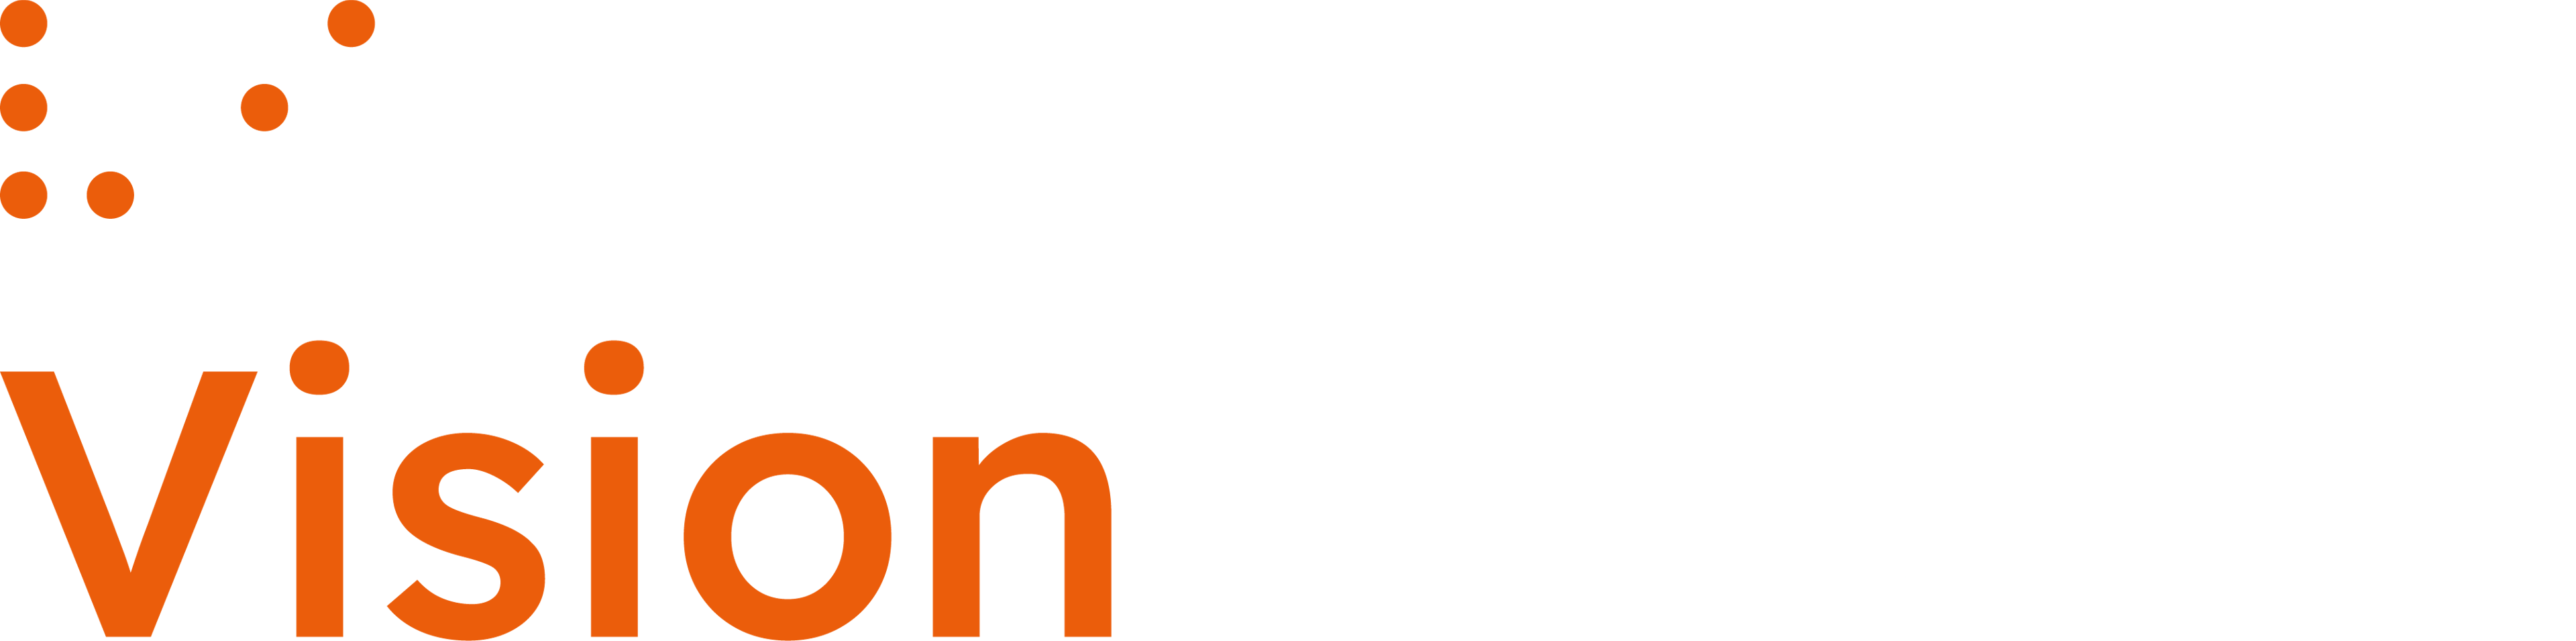 Vision Ireland Logo